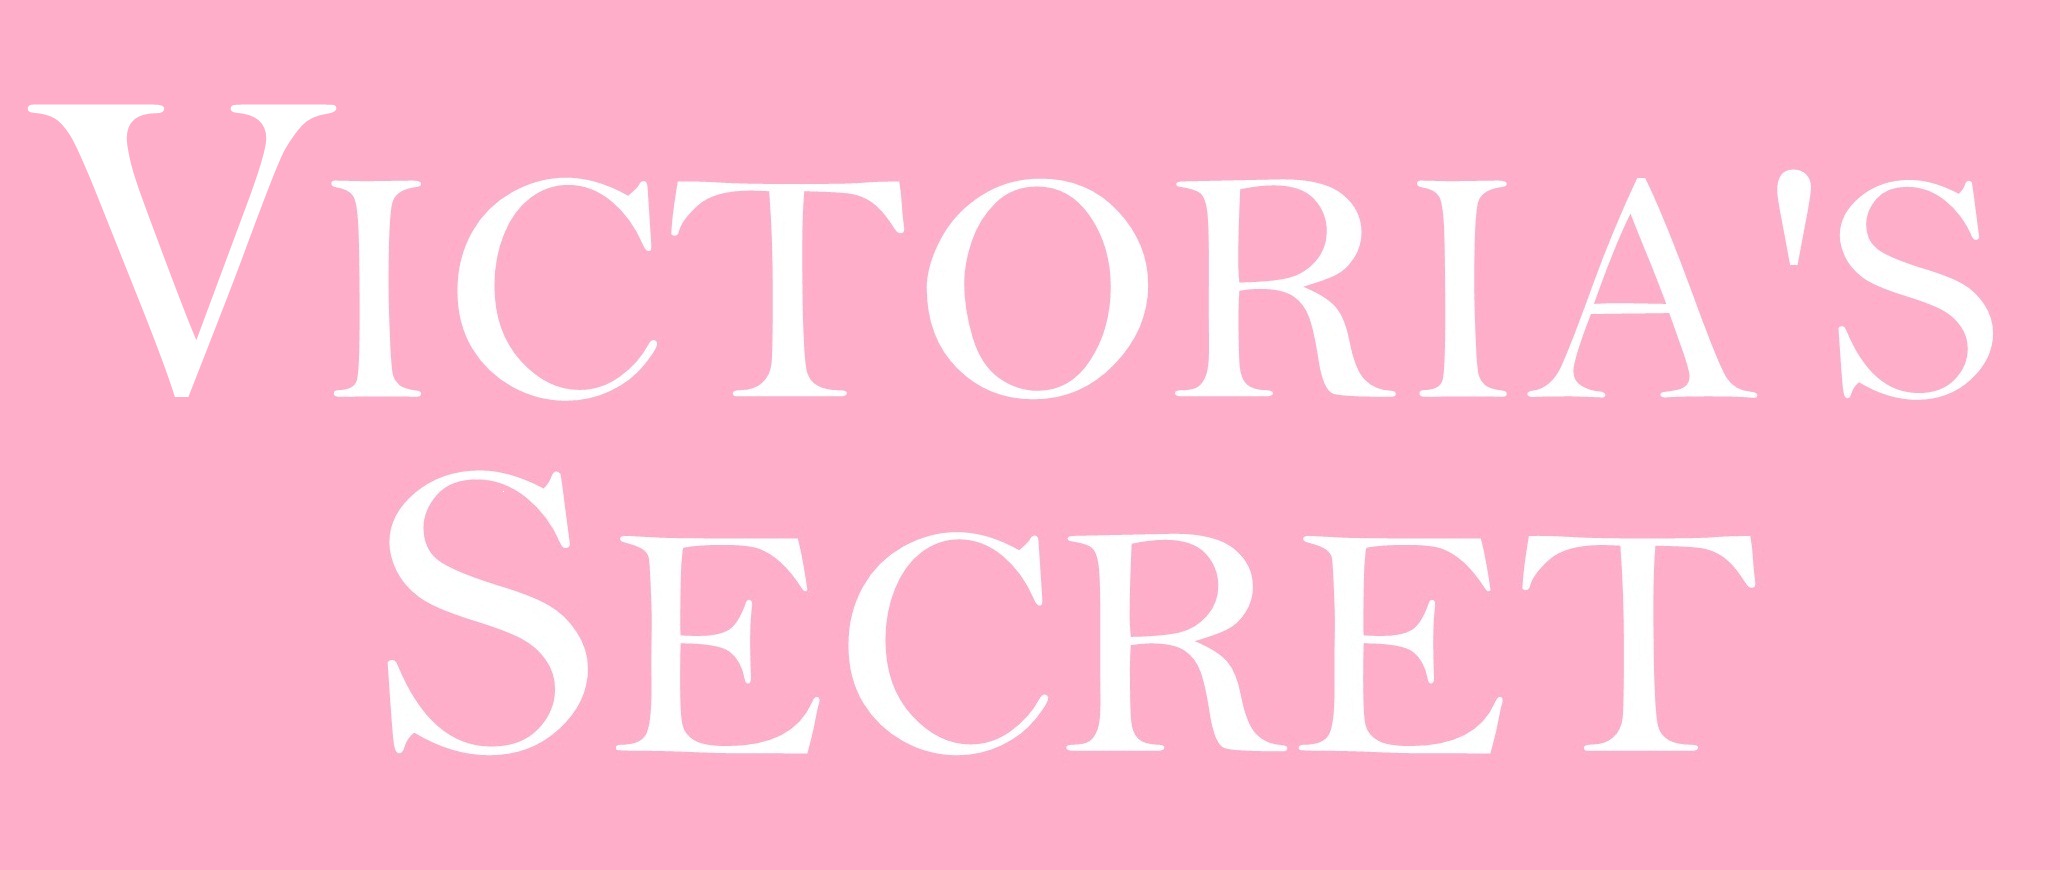 Victoria Secret Logo Wallpaper Related Keywords